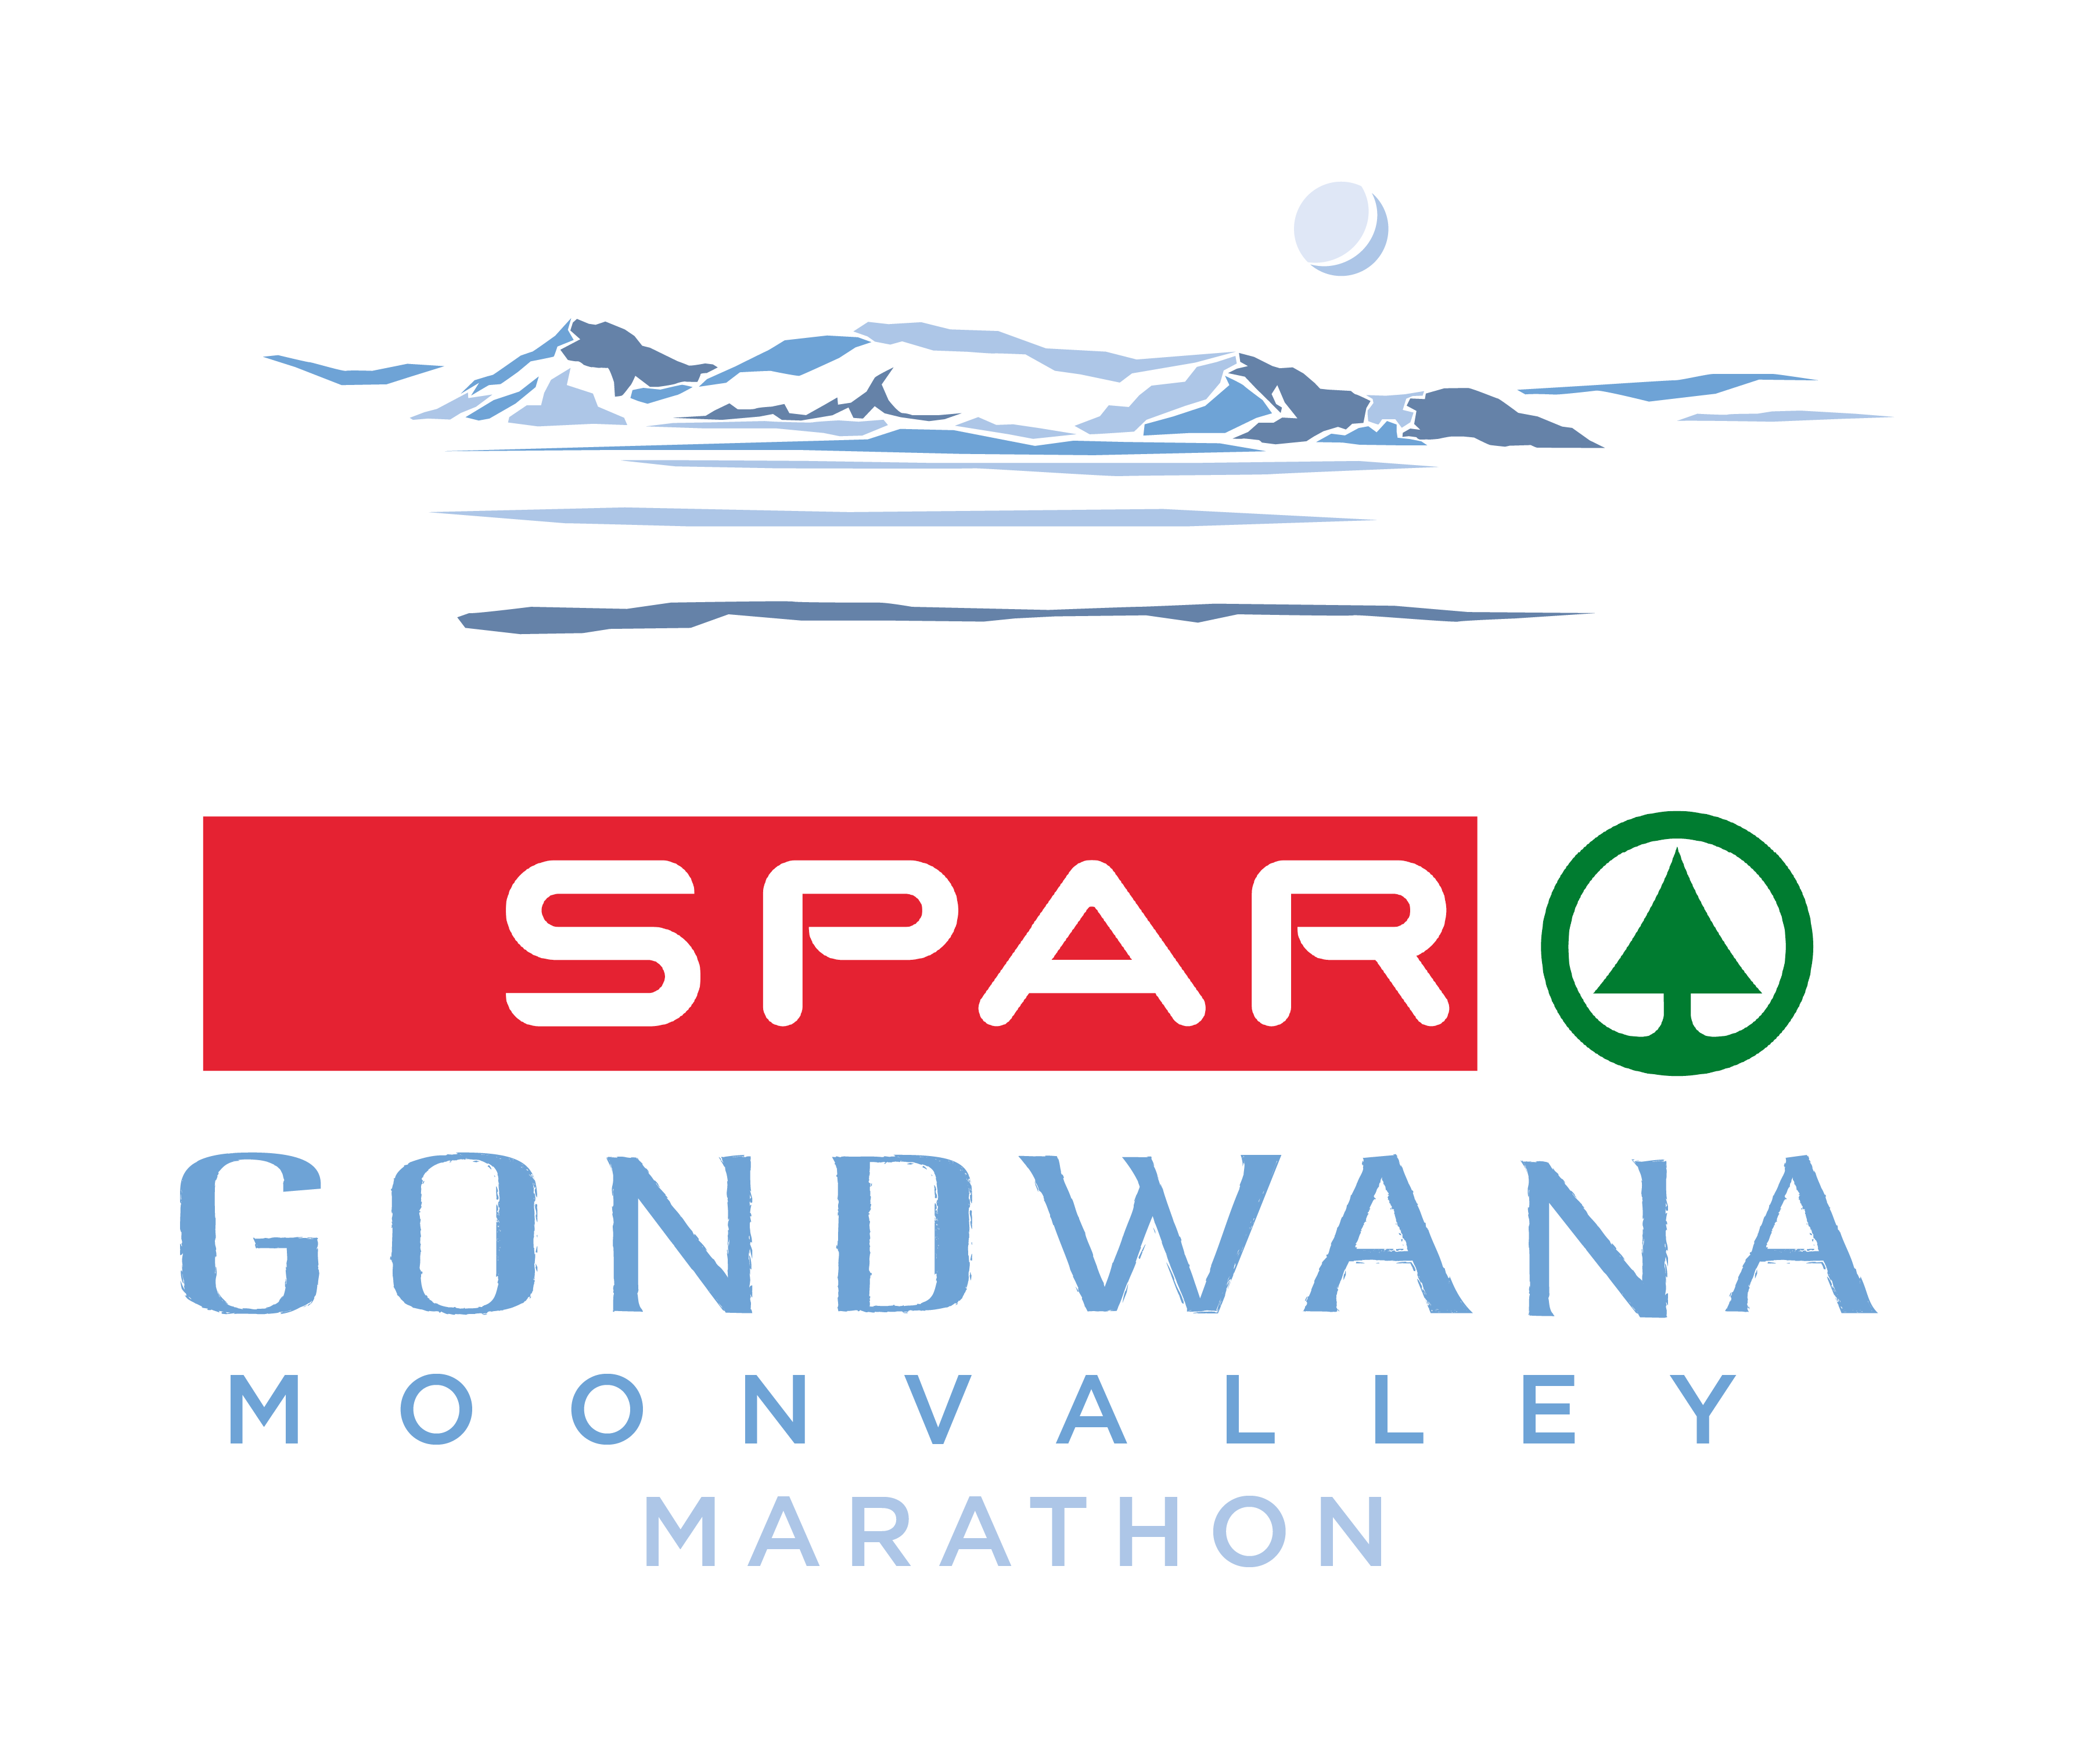 Moon Valley Marathon logo